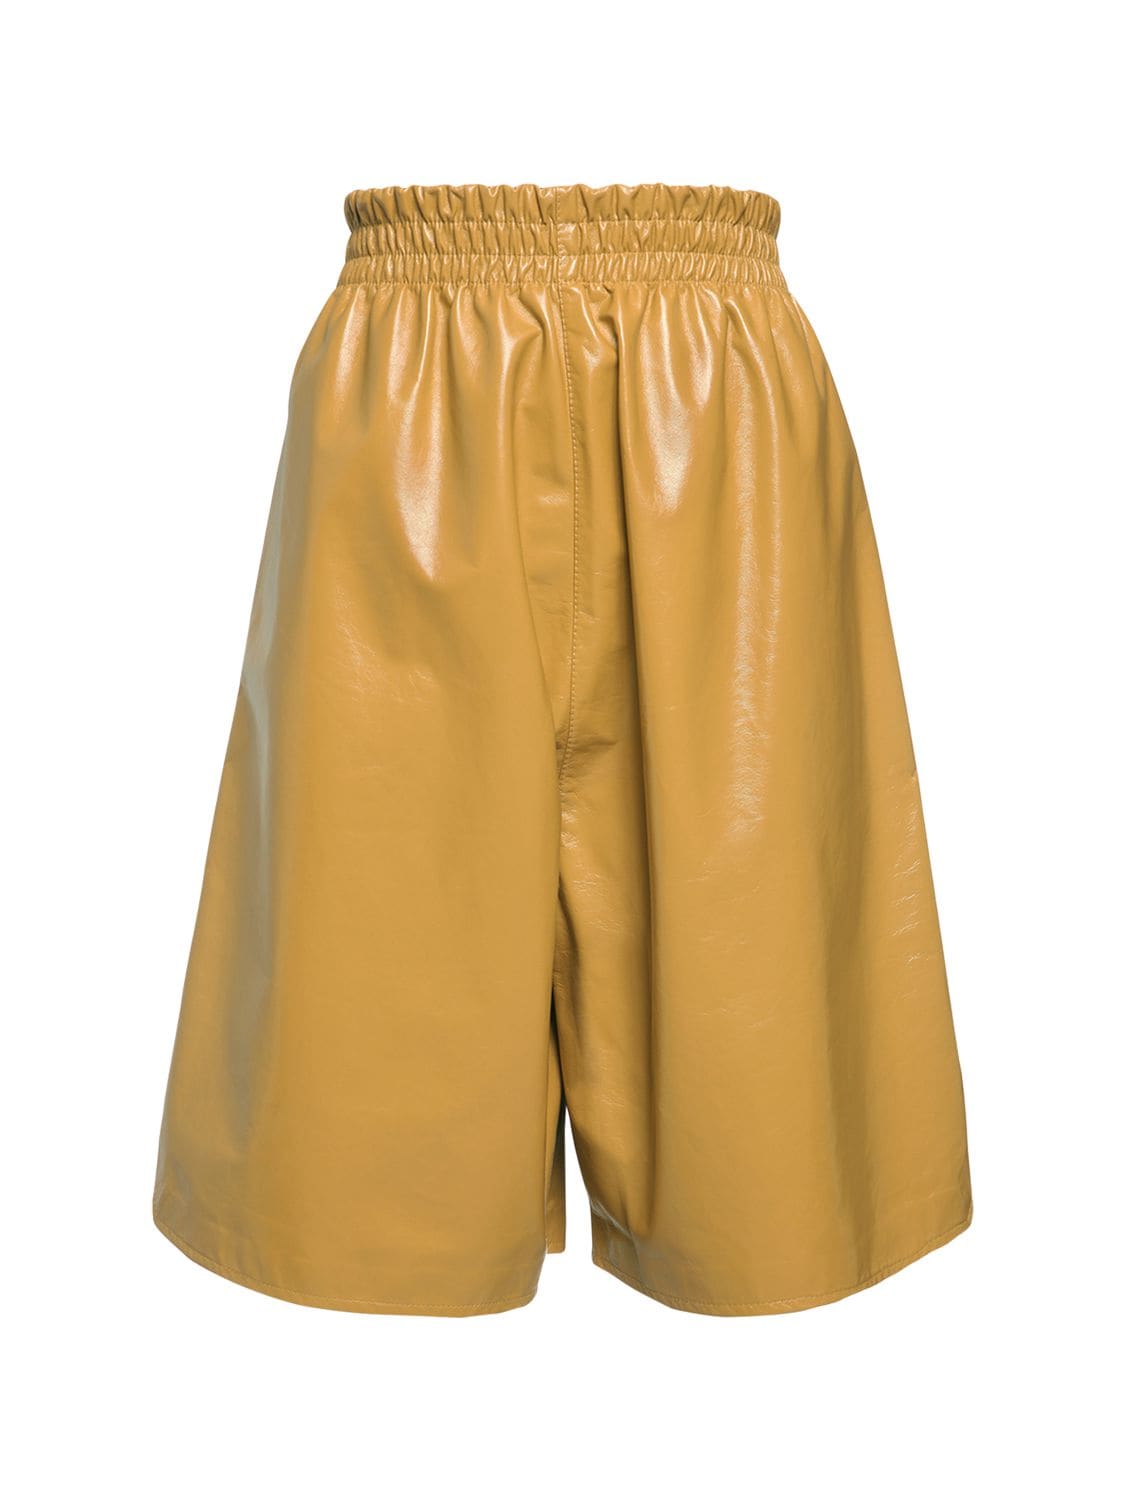 Patent Leather Bermuda Shorts